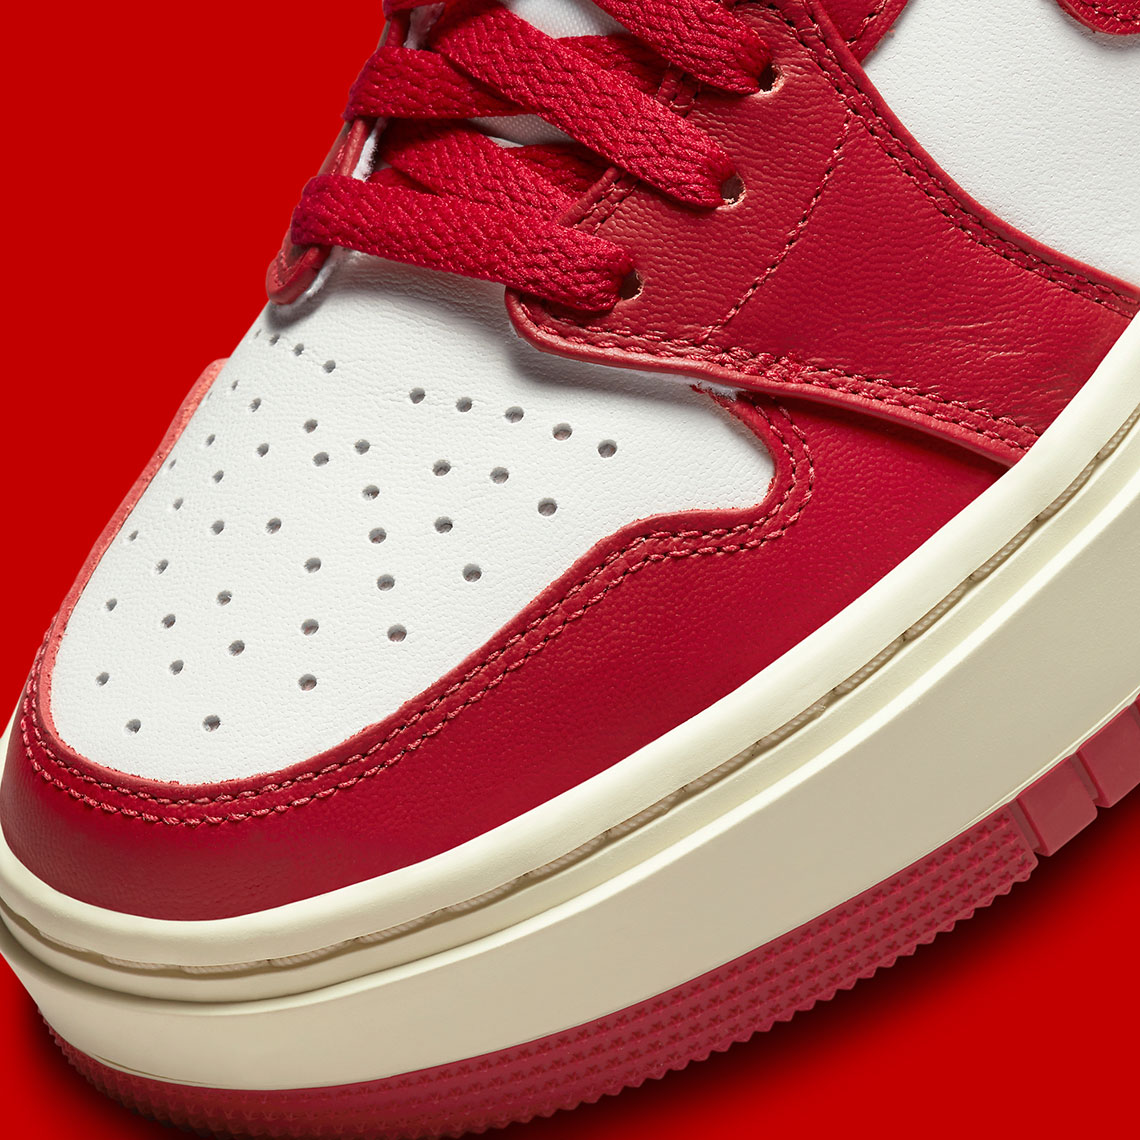 First Look At The Air Jordan 1 High Elevate - SneakerNews.com